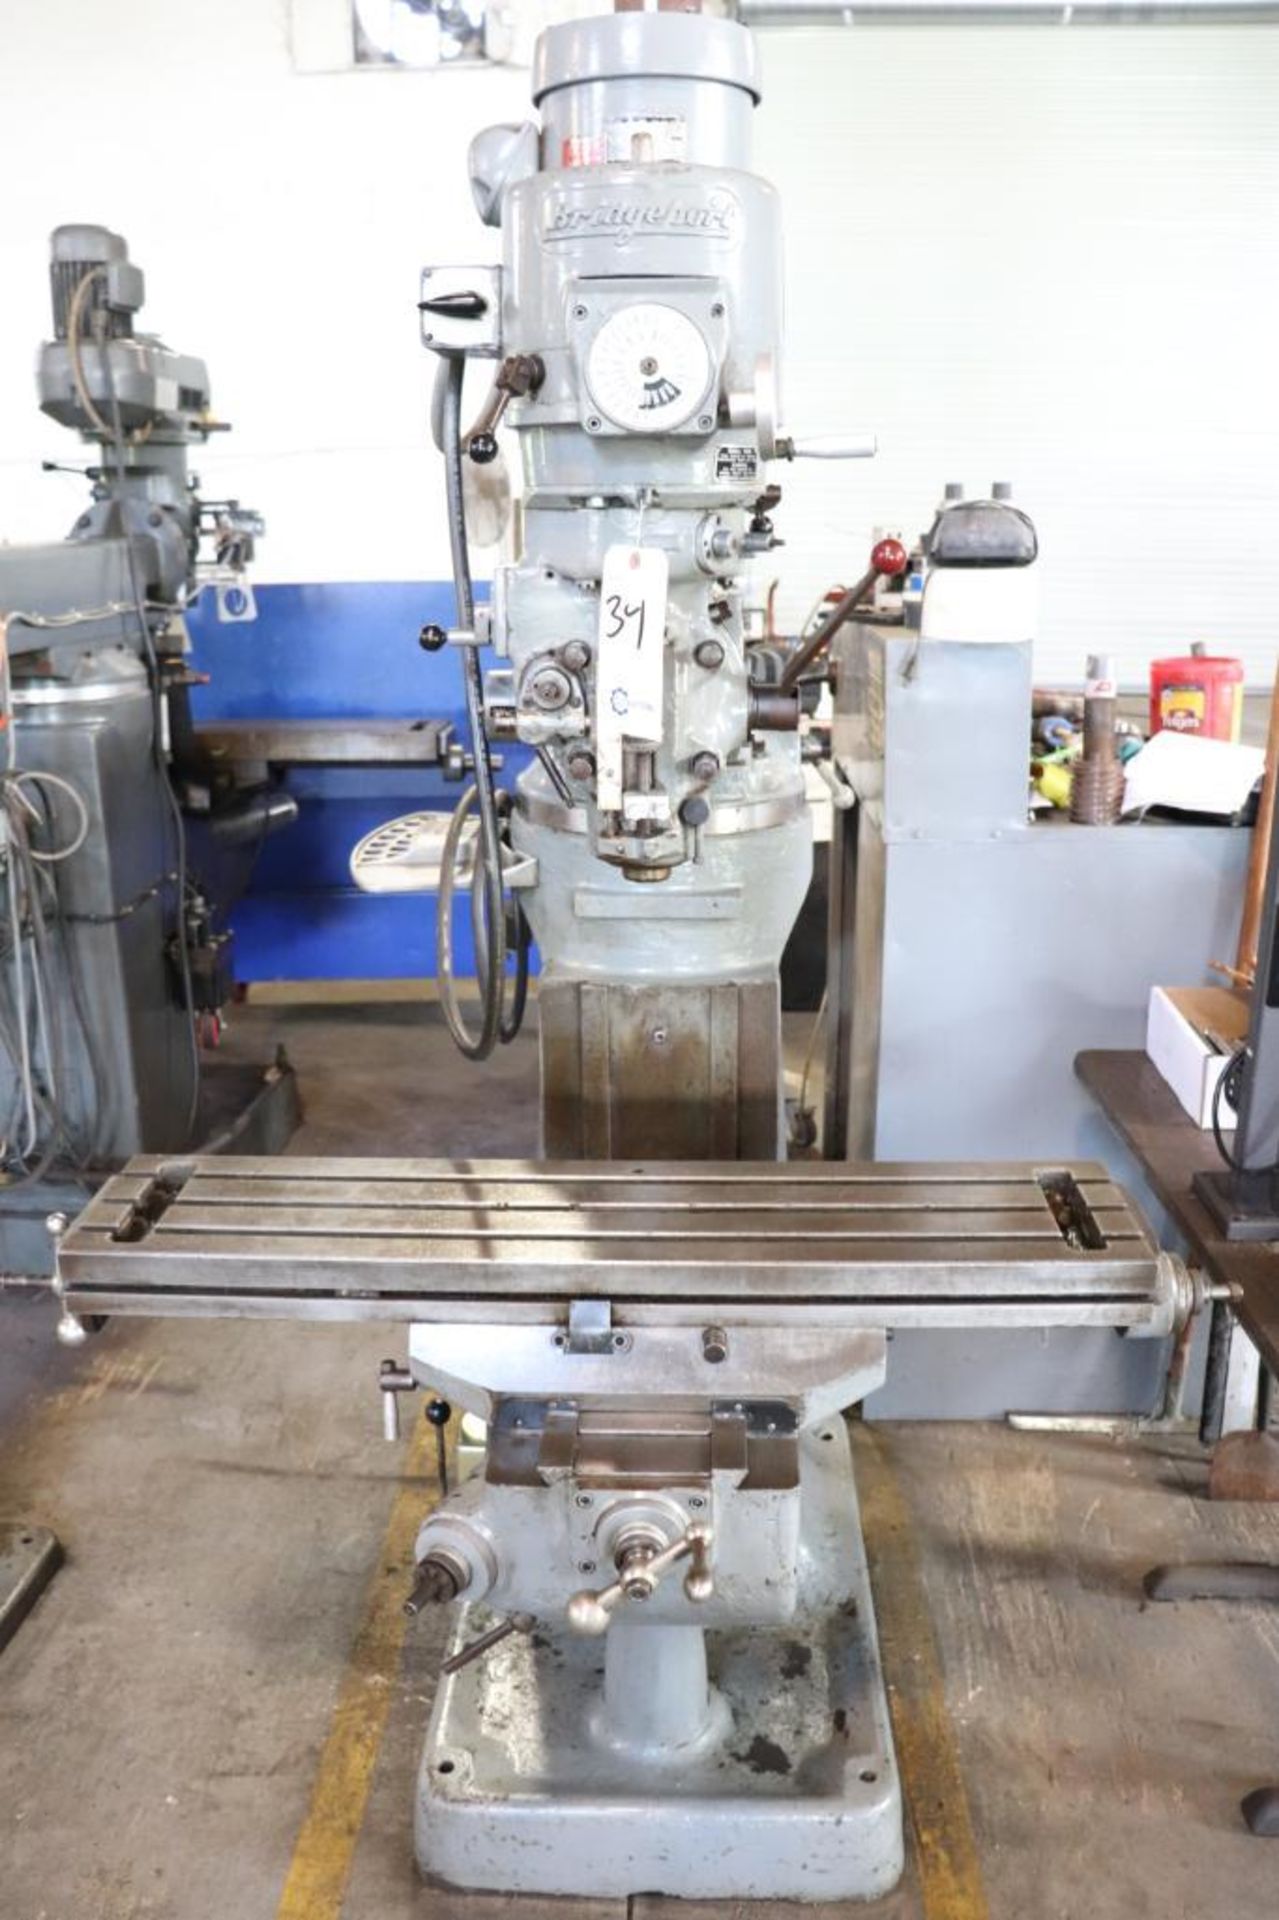 Import milling machine w/ Bridgeport head - Image 3 of 13